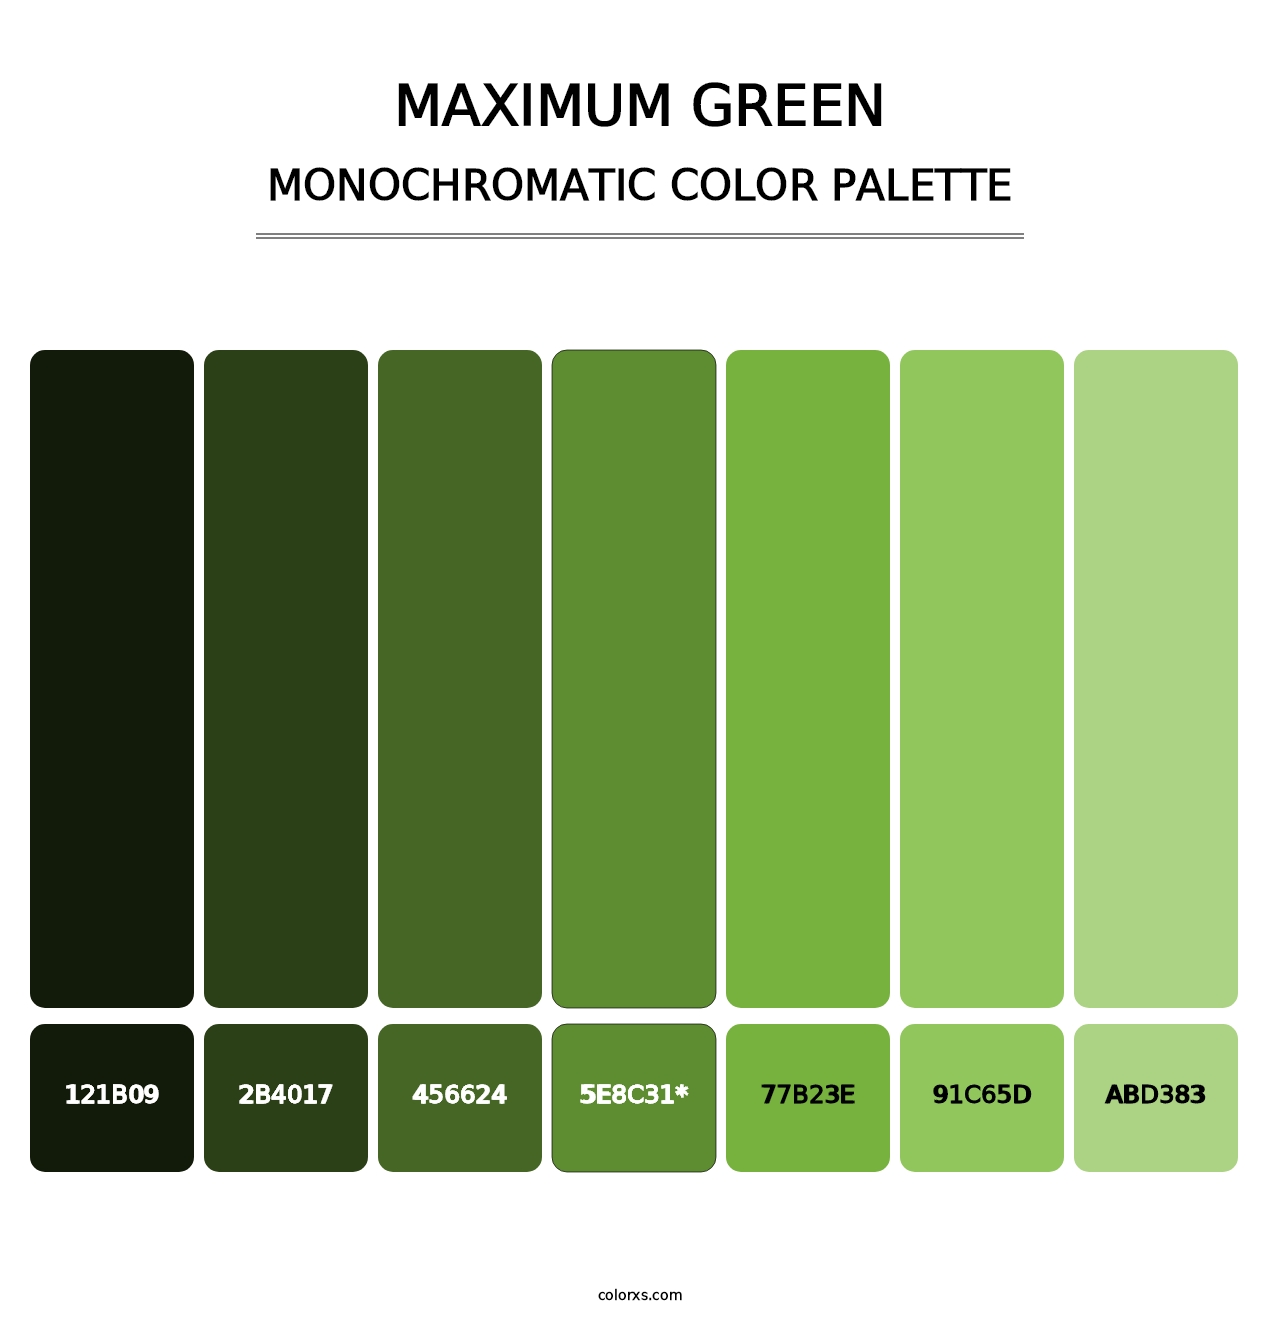 Maximum Green - Monochromatic Color Palette